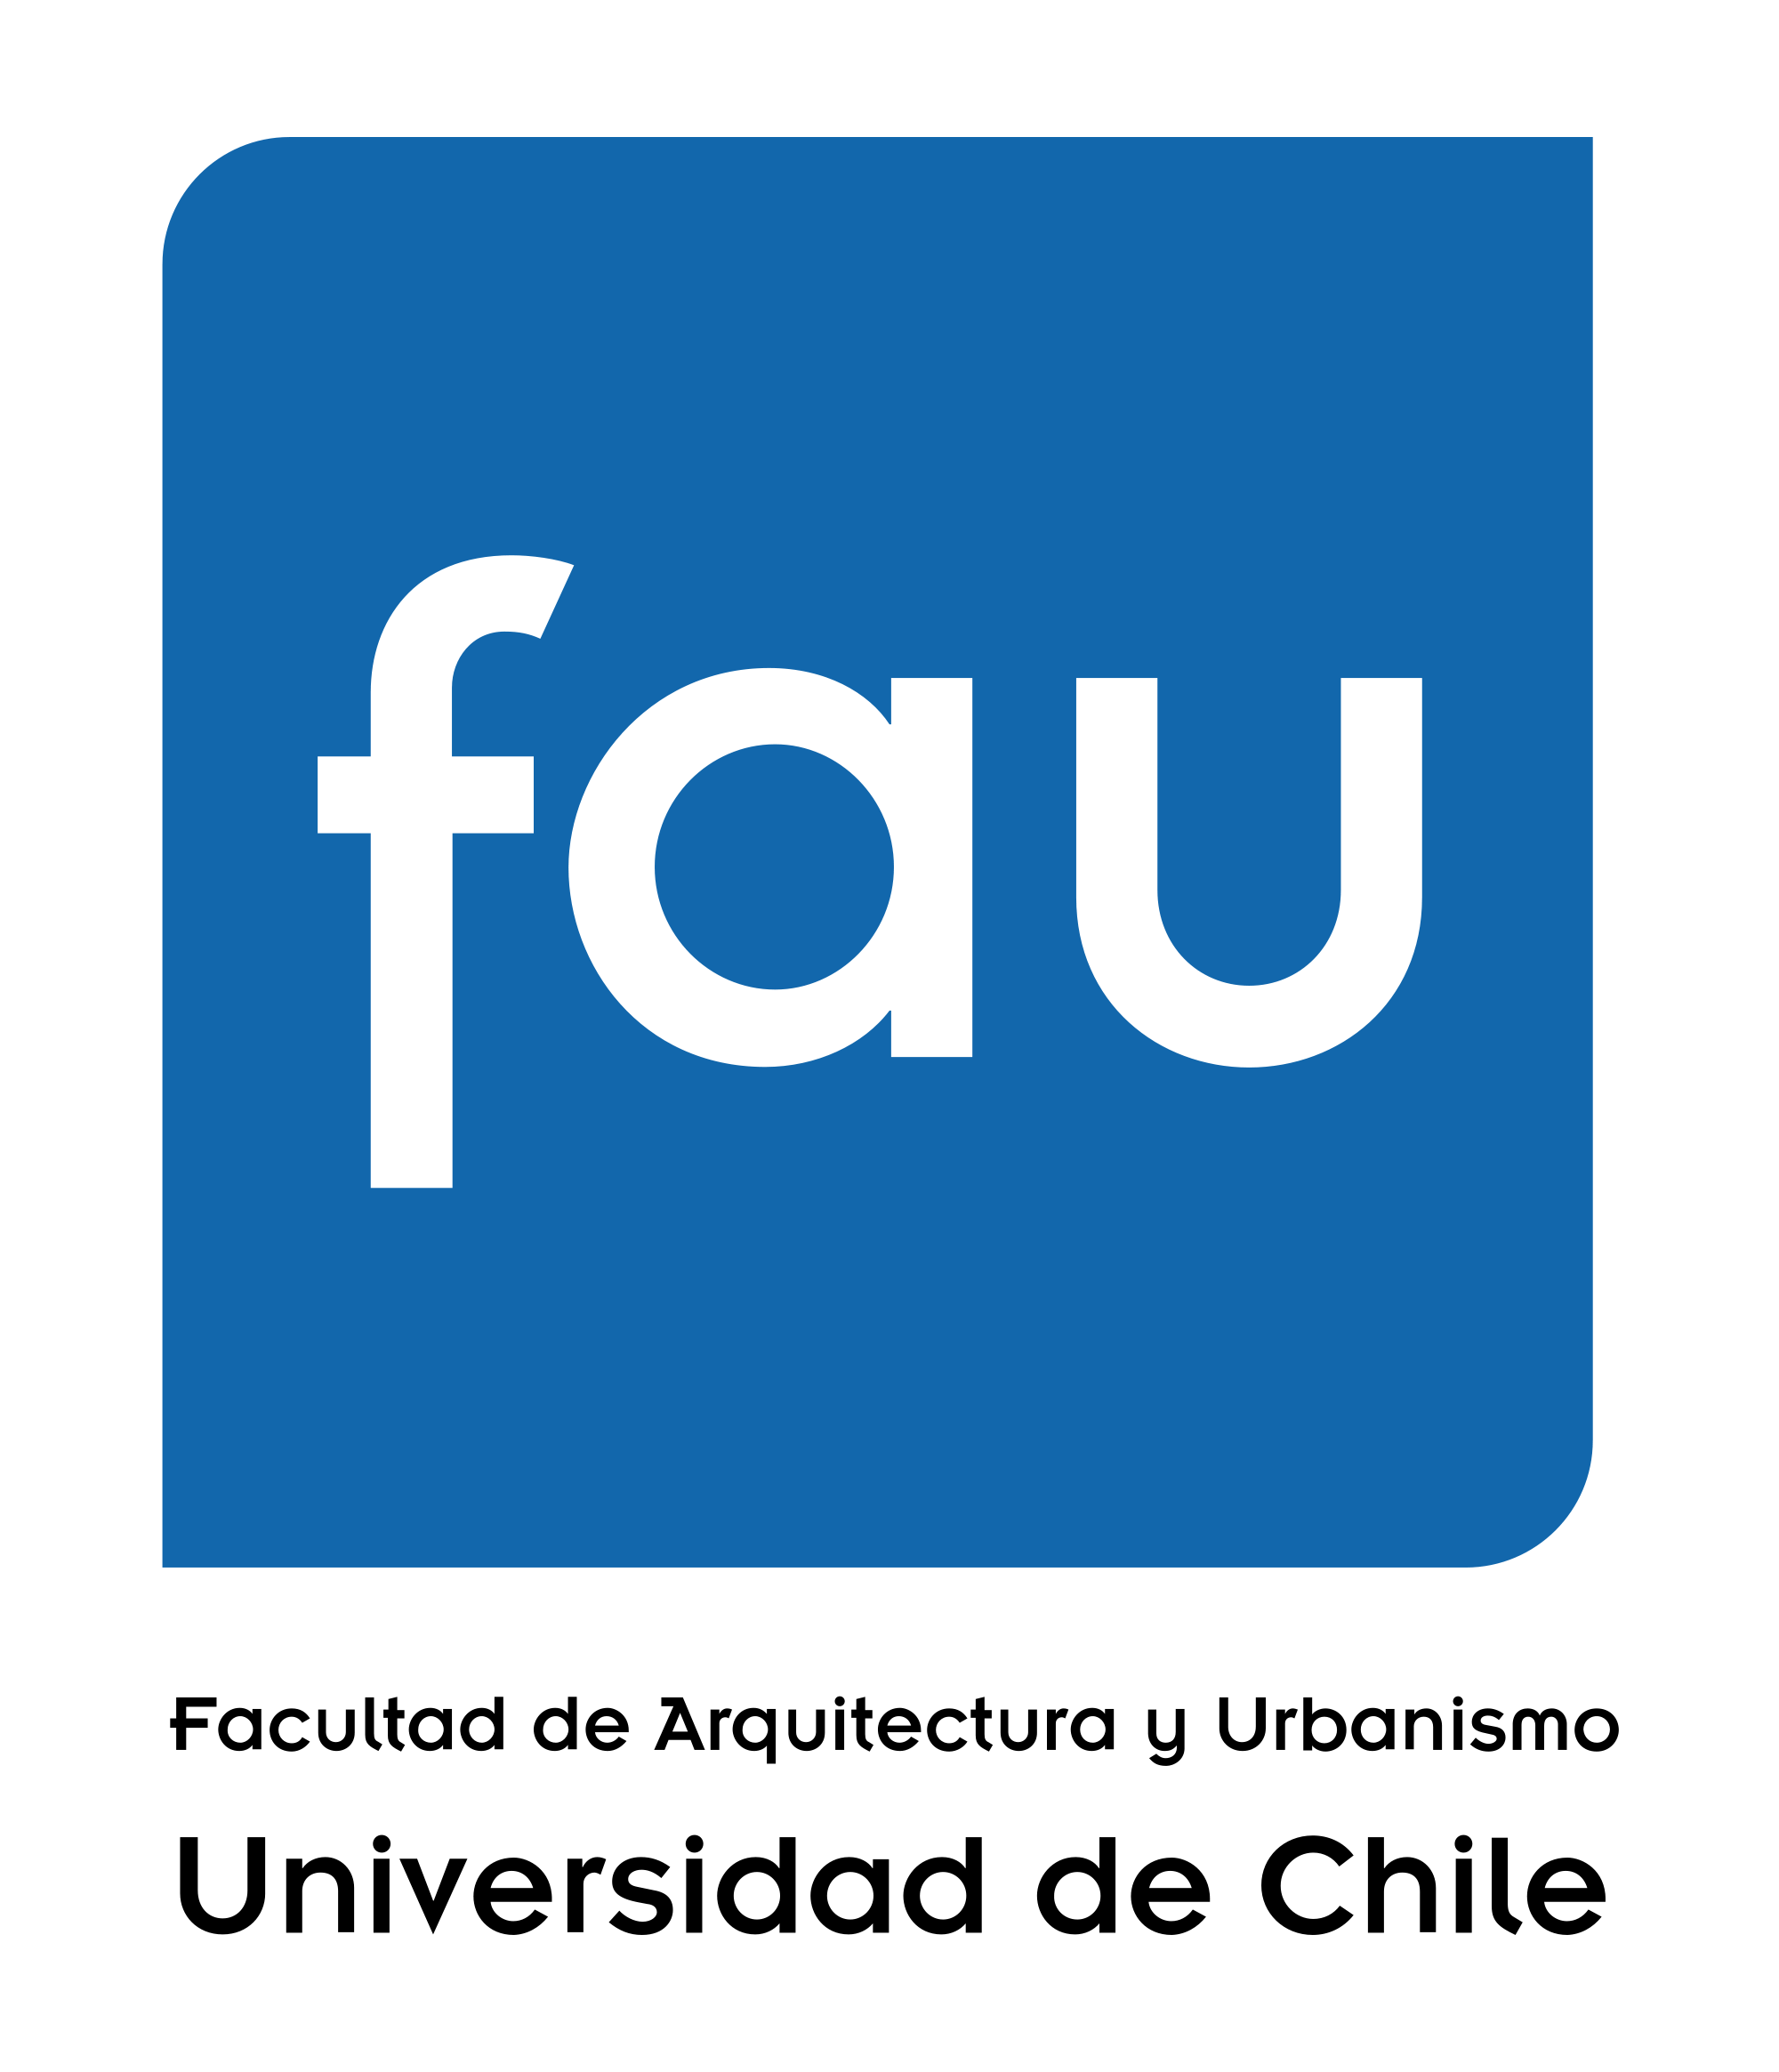 FAU Logo - File:Logo fau vertical.svg - Wikimedia Commons